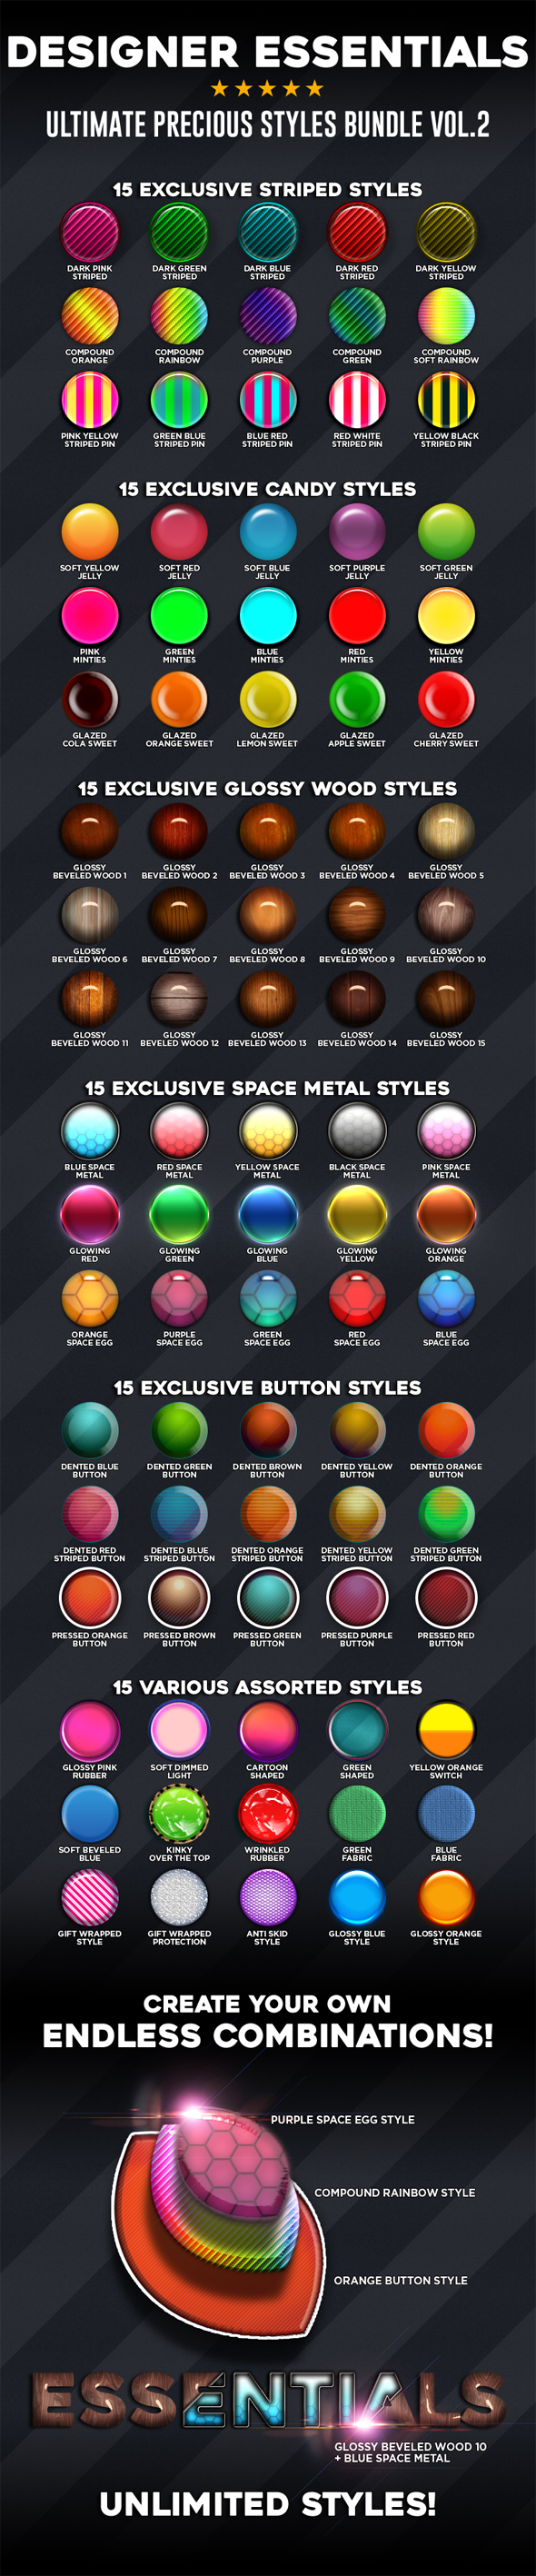 Designer Essentials Ultimate Precious Styles Bundle Vol.2